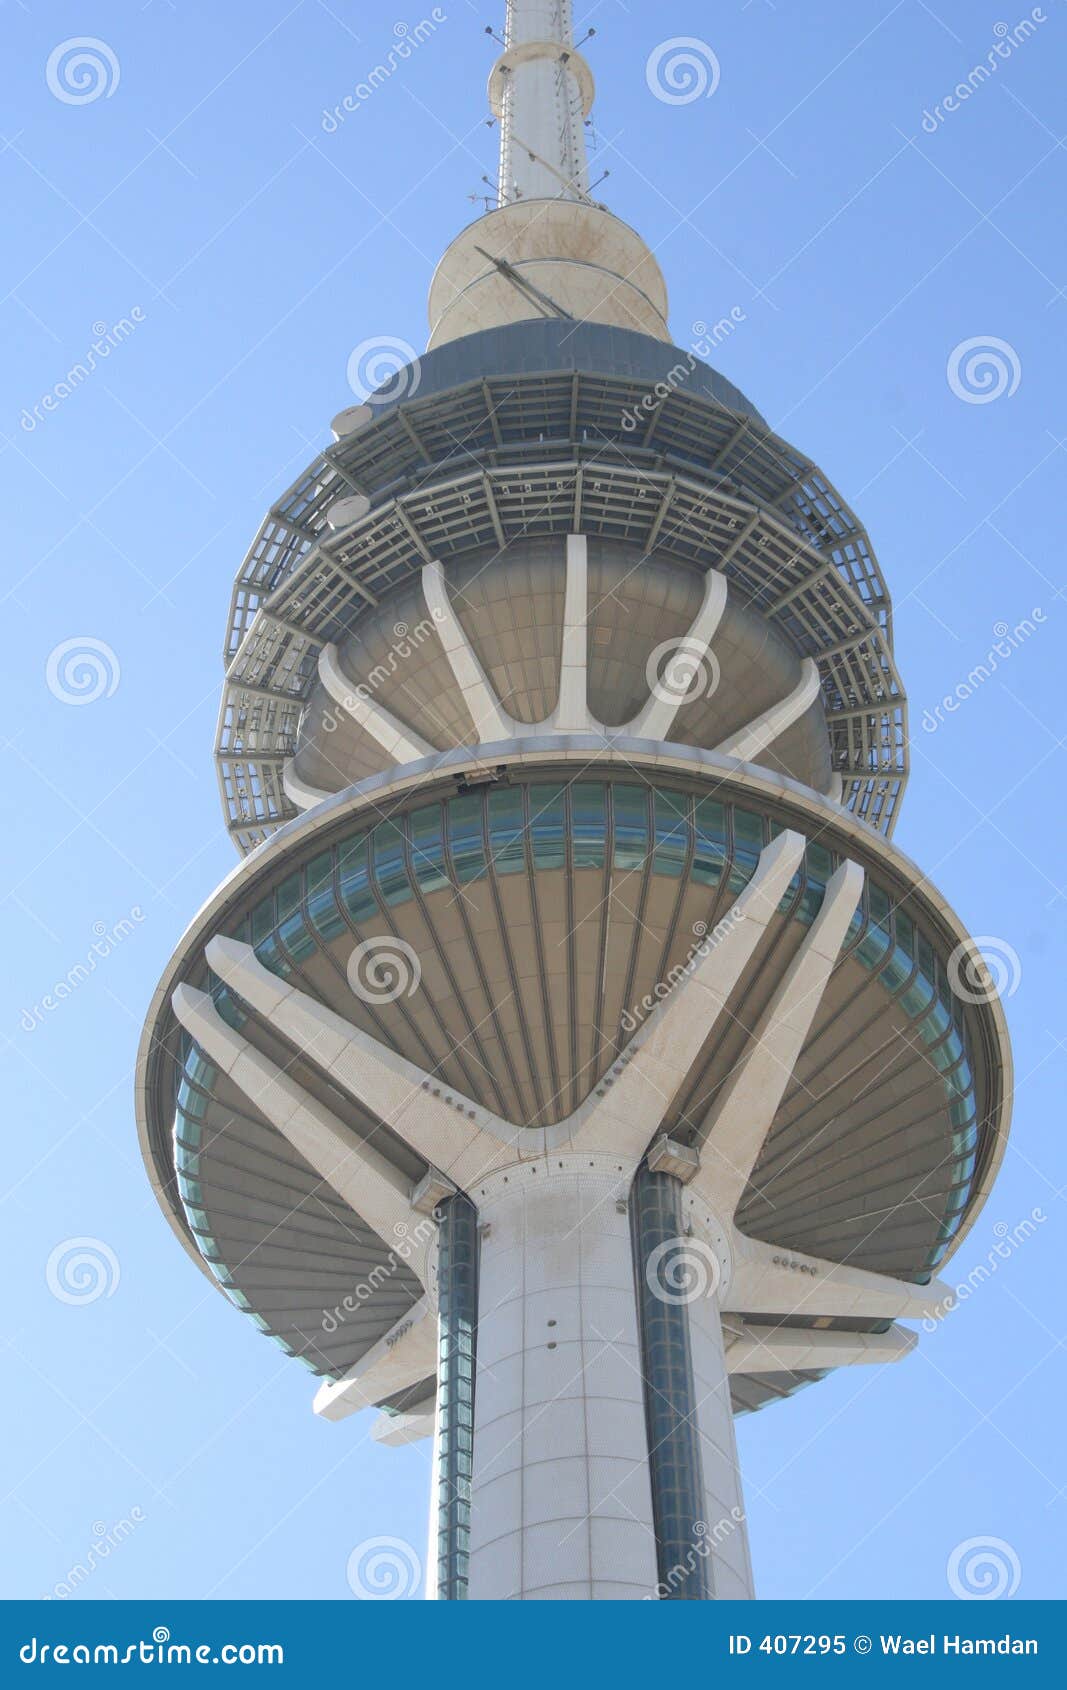 comunication tower